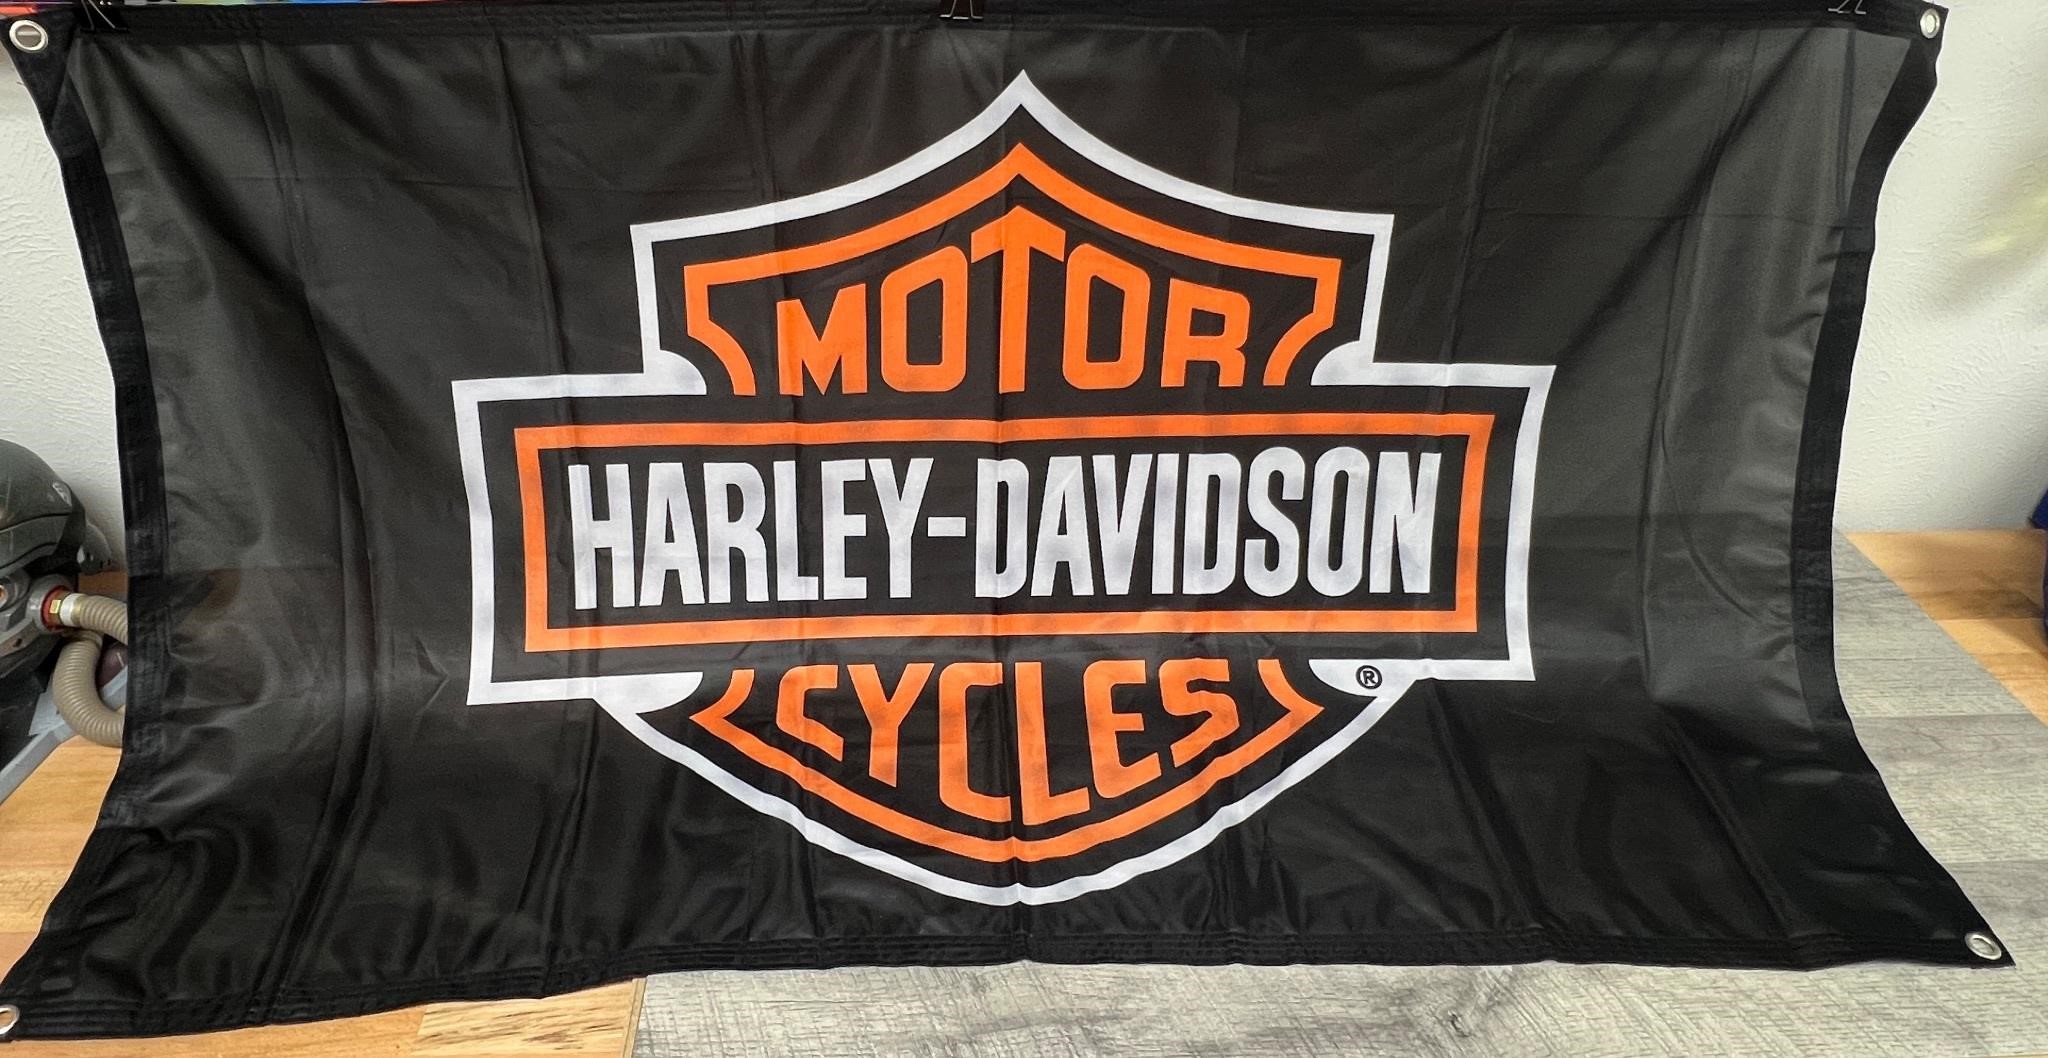 Harley Davidson banner approx 58 x 34”